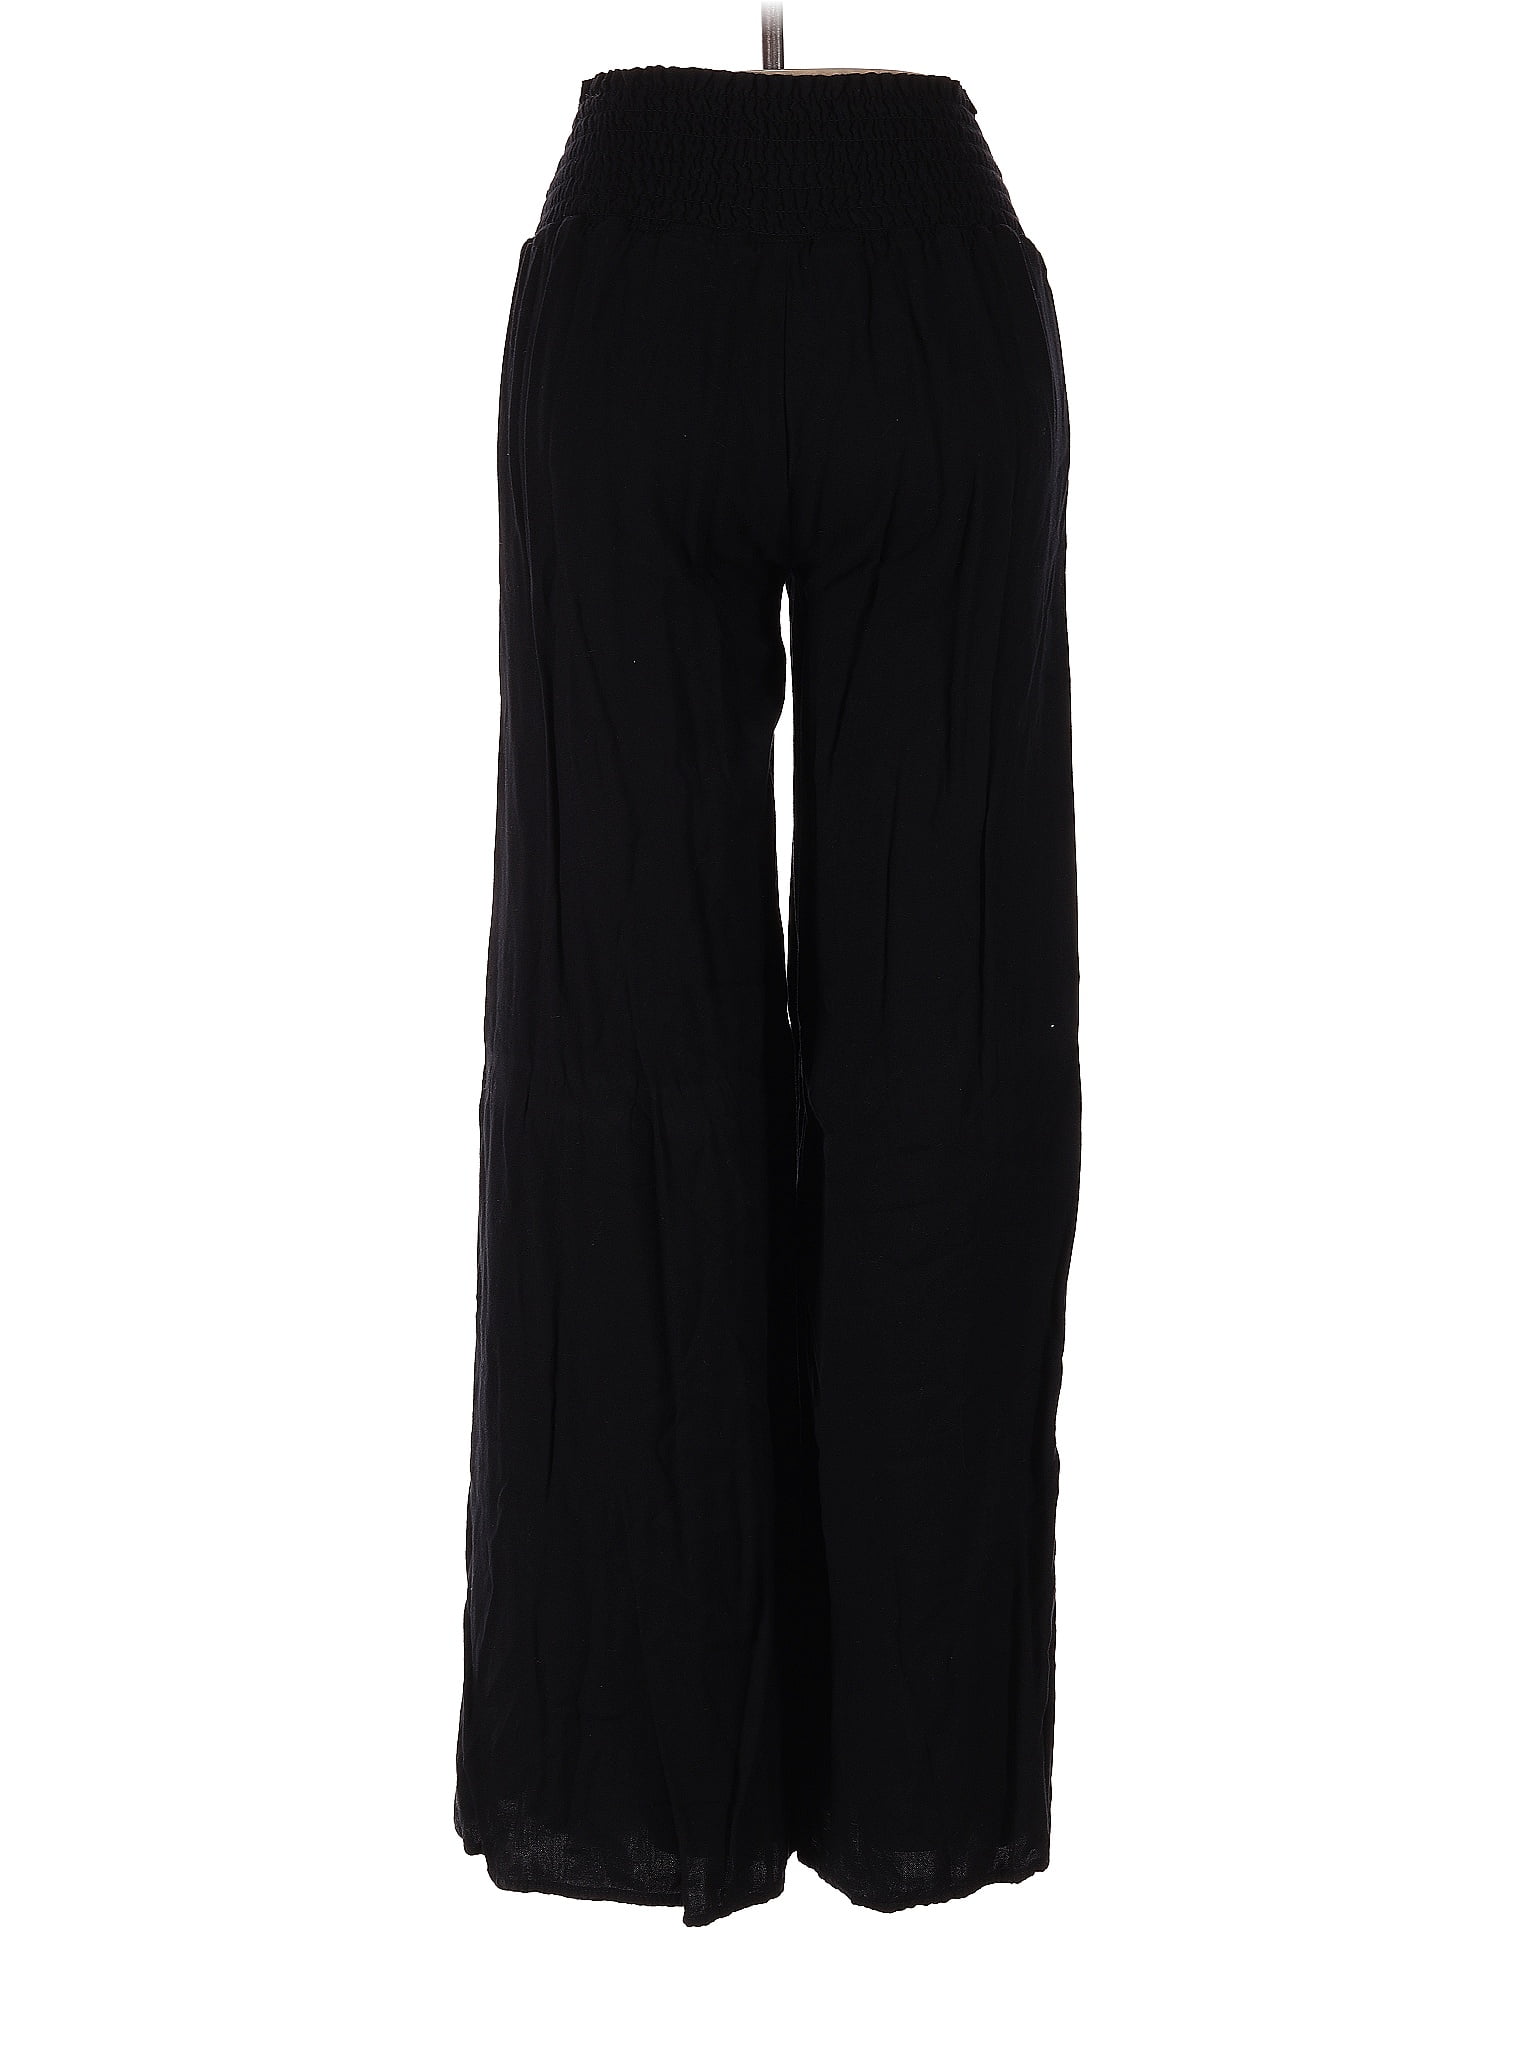 colorfulkoala Black Active Pants Size XS - 64% off